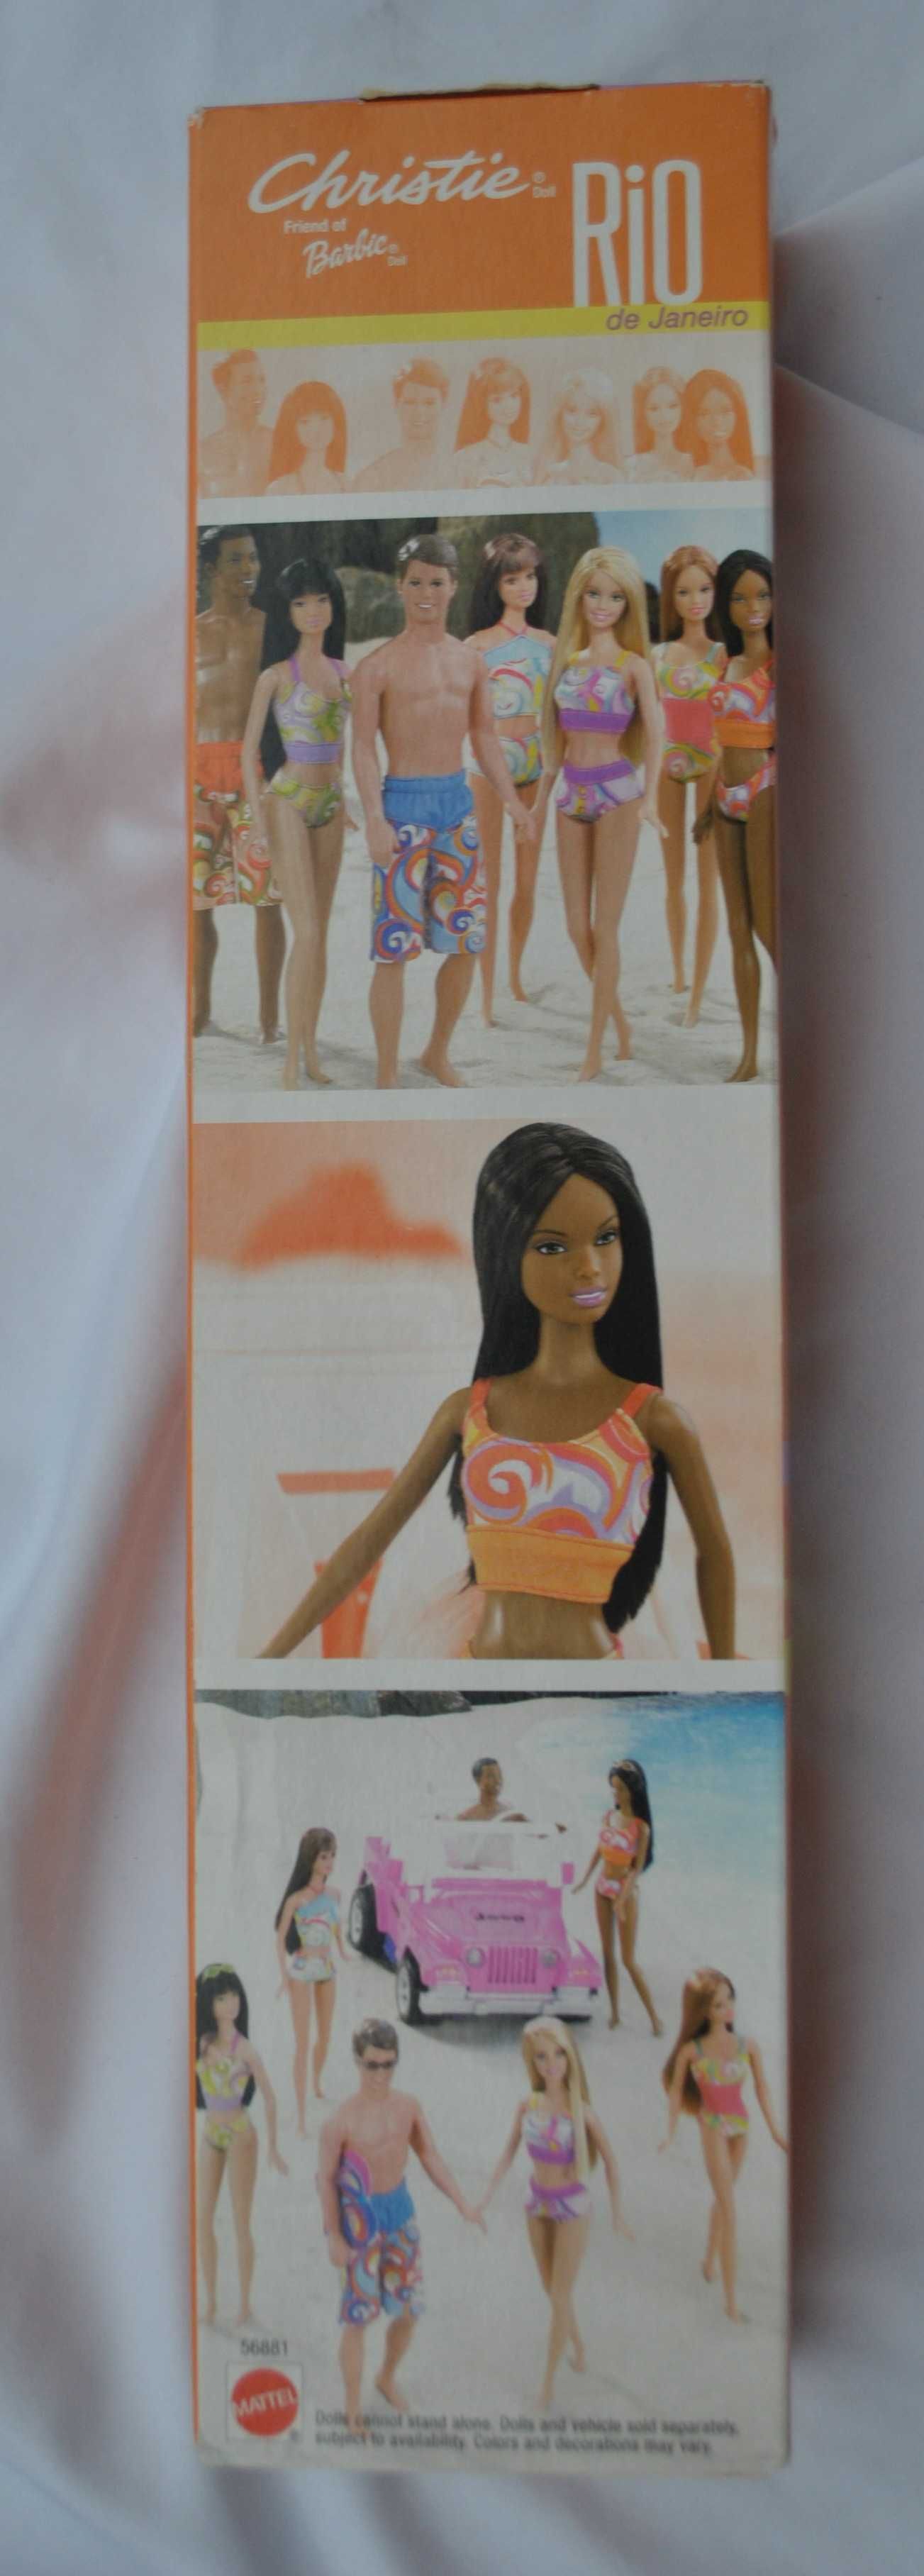 lalka barbie - Rio de Janerio Christie - mattel 2002